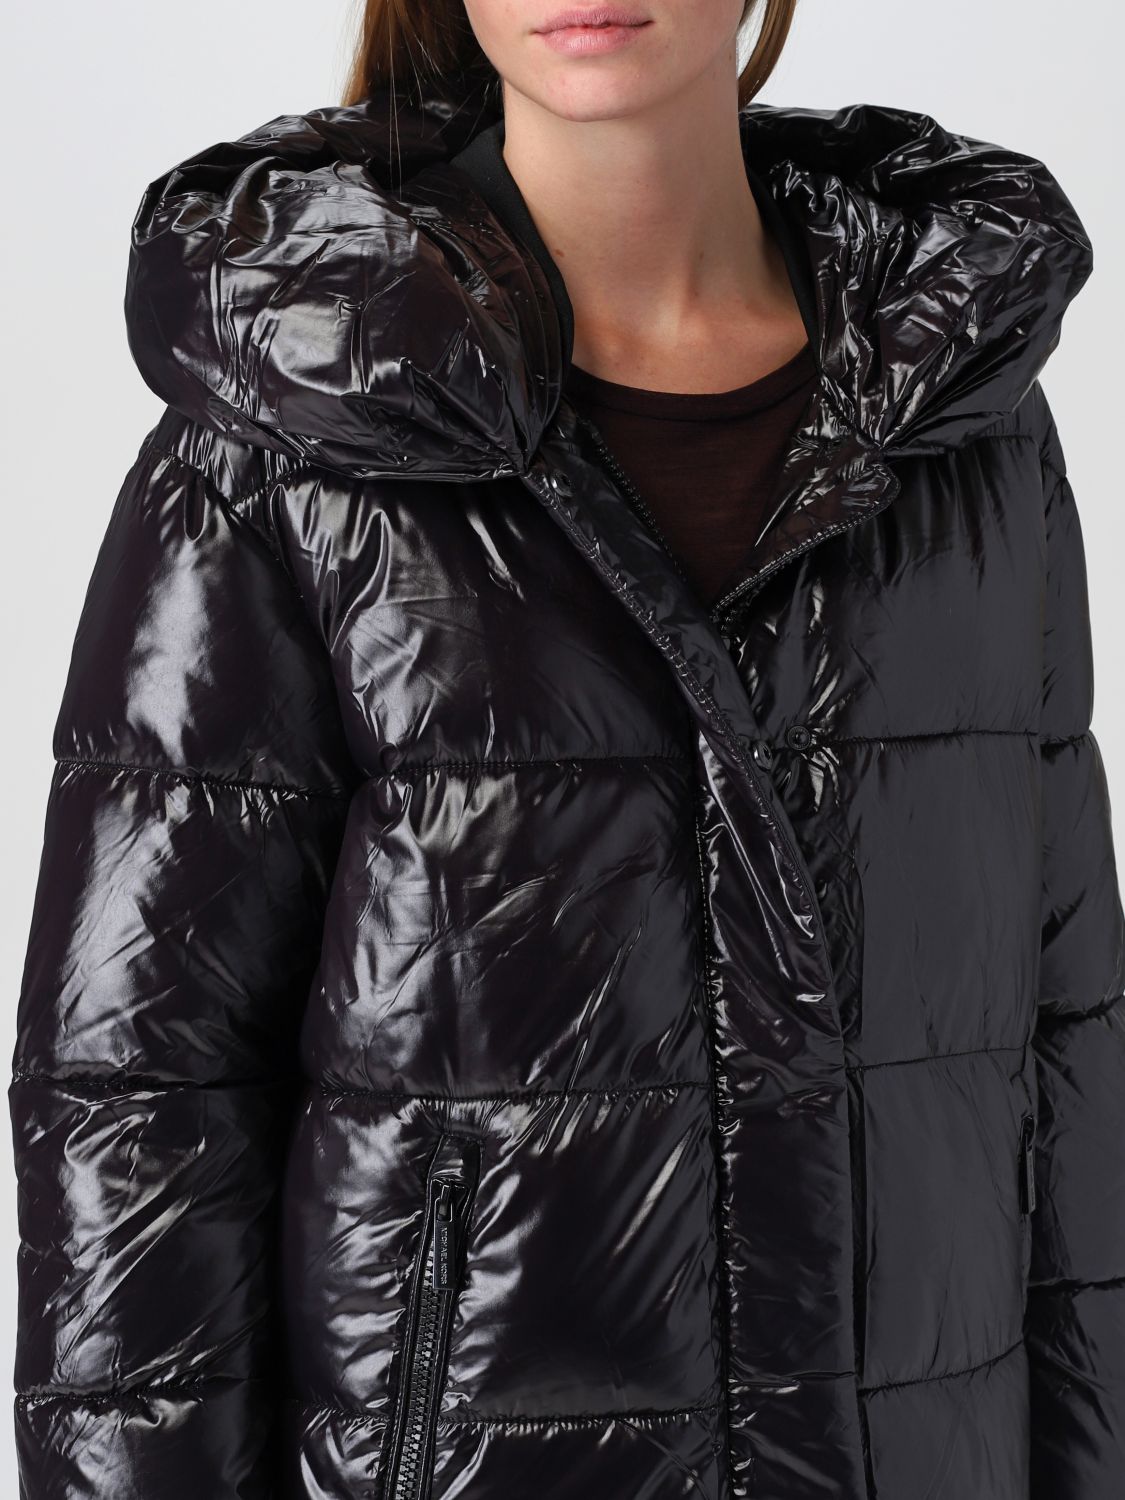 MICHAEL KORS: jacket for women - Black | Michael Kors jacket 77Q5805M42  online on 